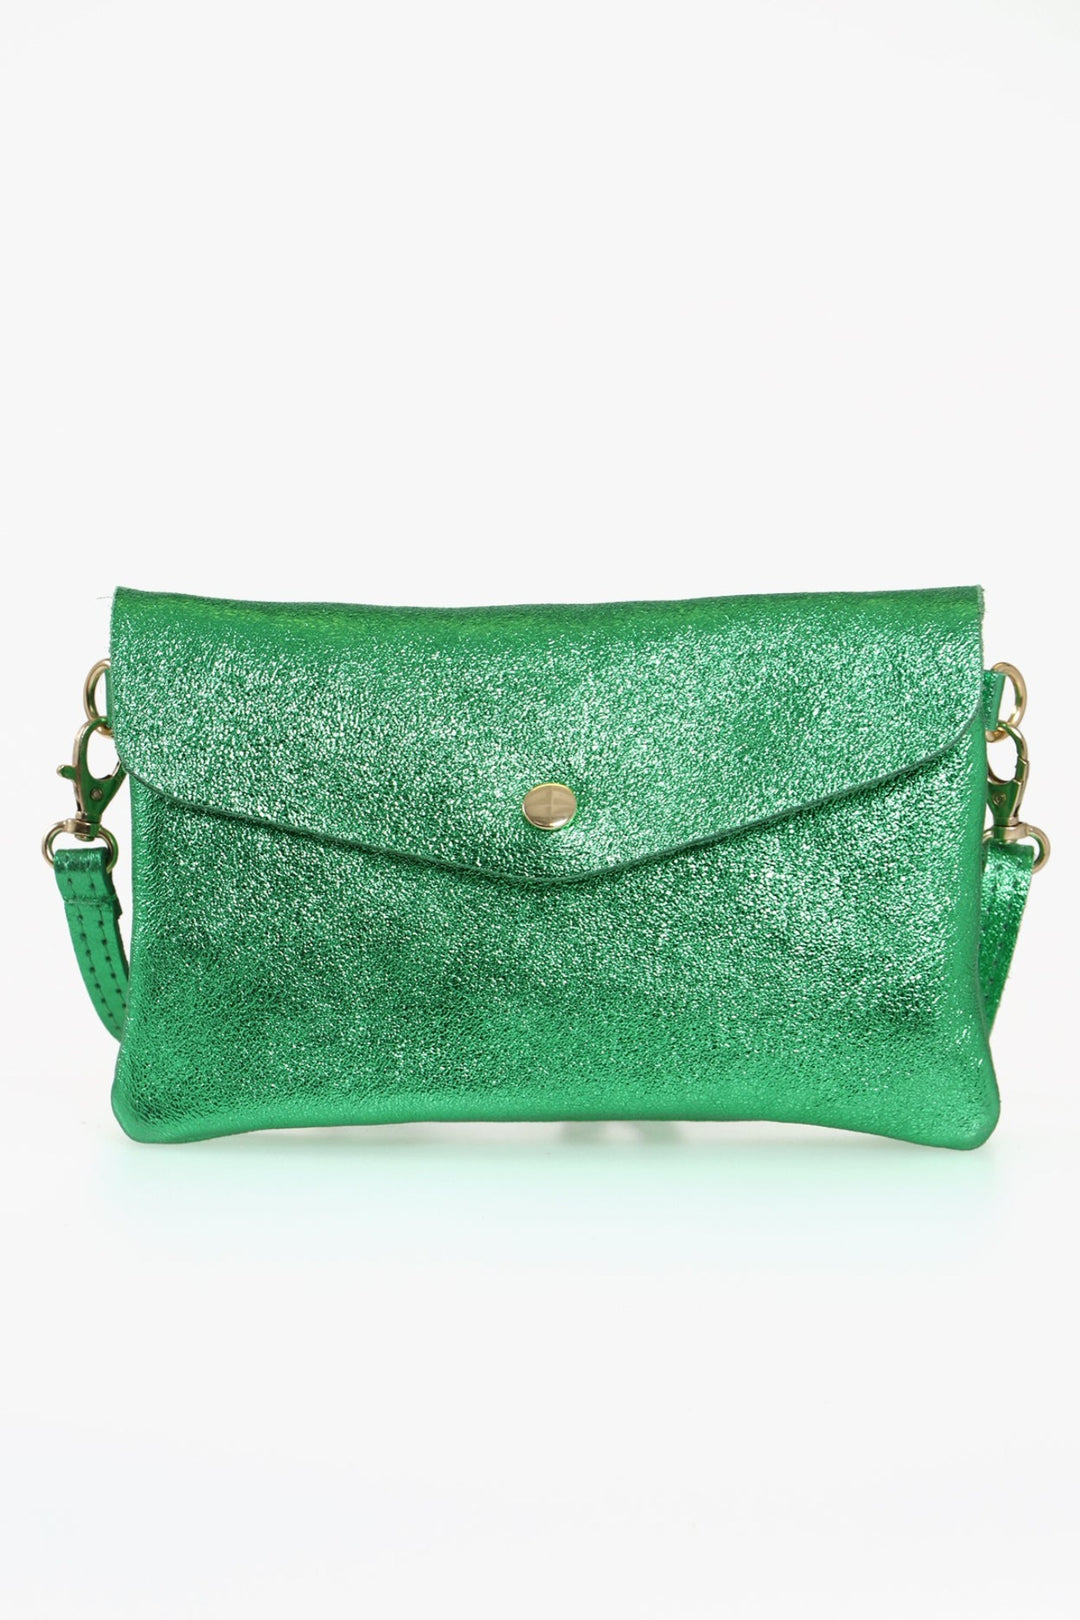 Metallic Green Large Genuine Italian Leather Envelope Clutch